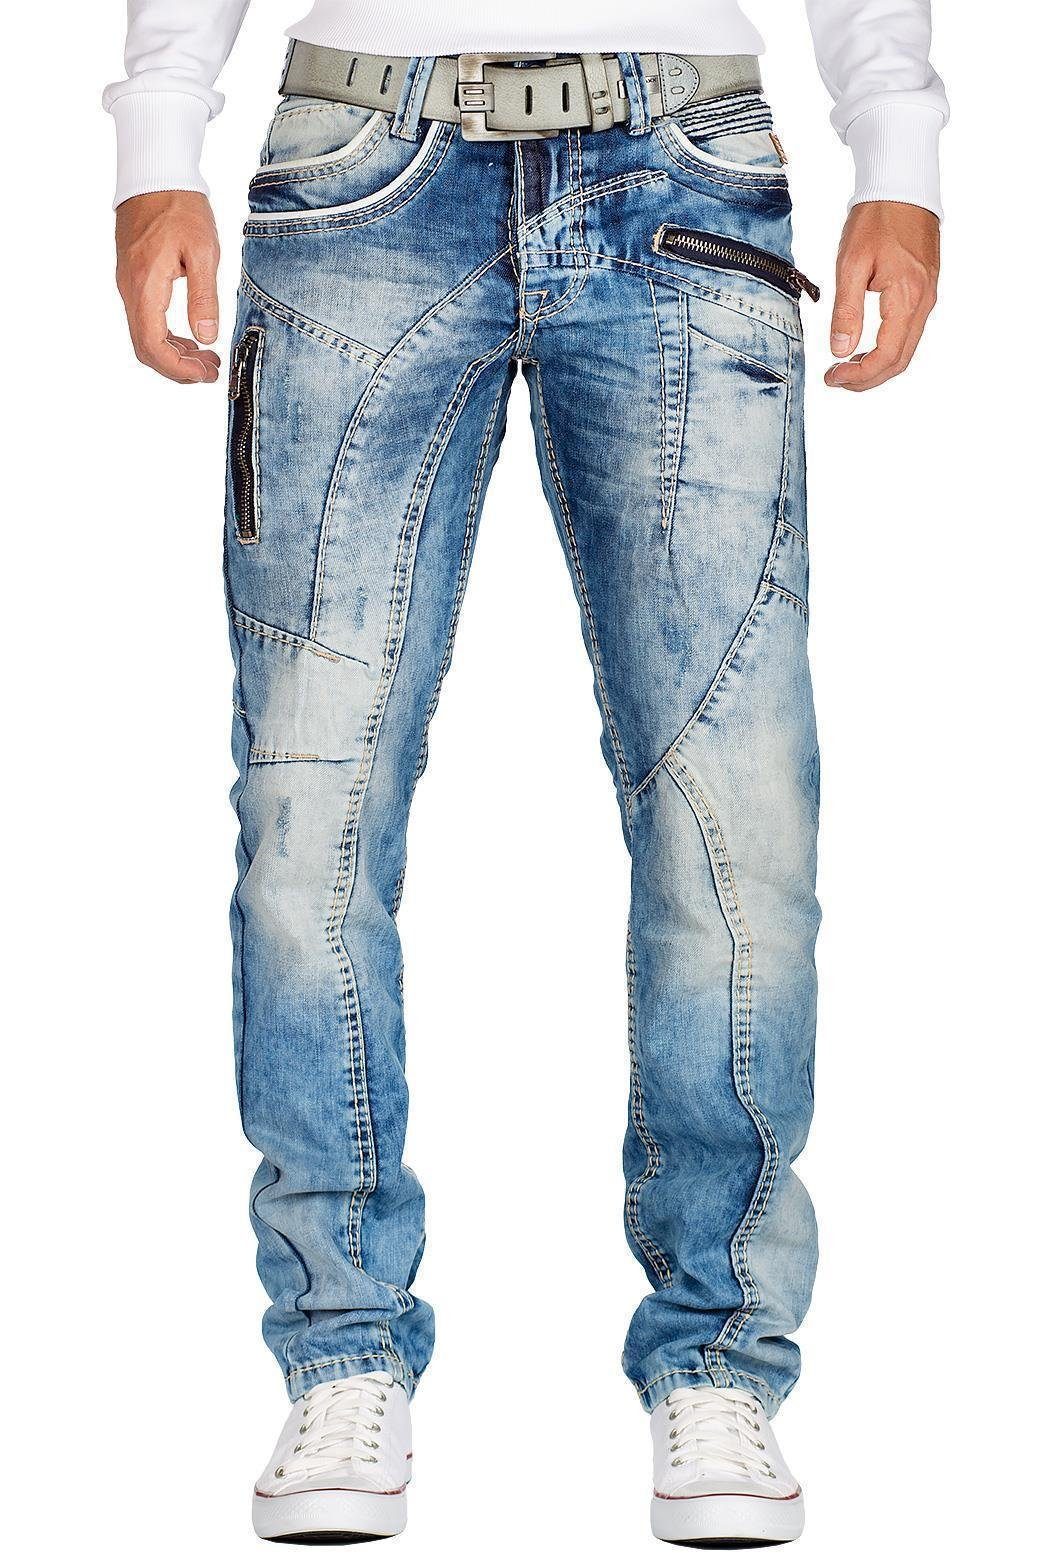 CIPO & BAXX C-1047 Men / Herren Jeans Hose Regular Fit NEU 